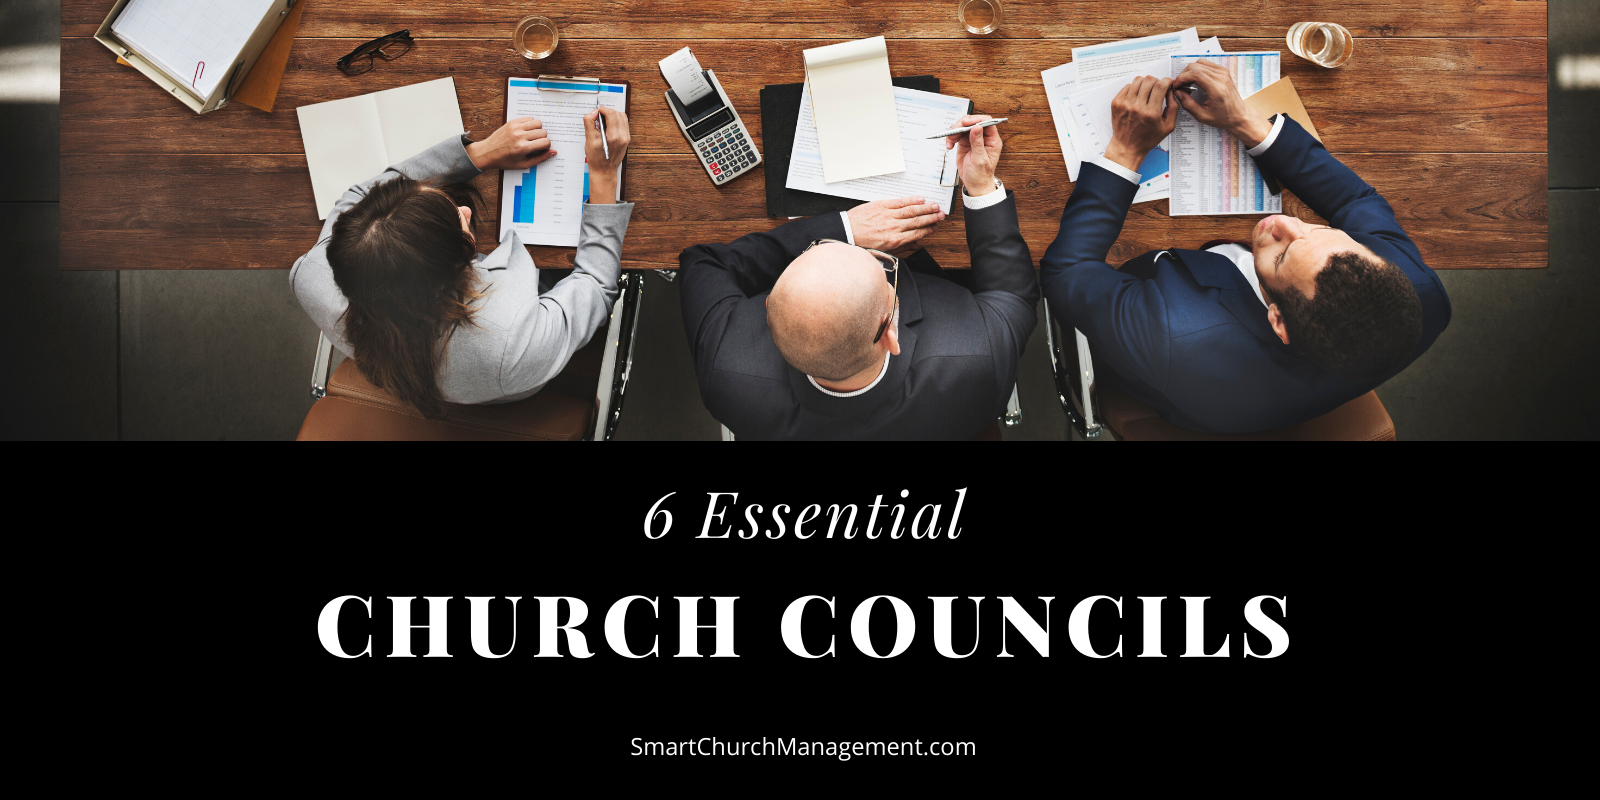 church councils that help make descisions